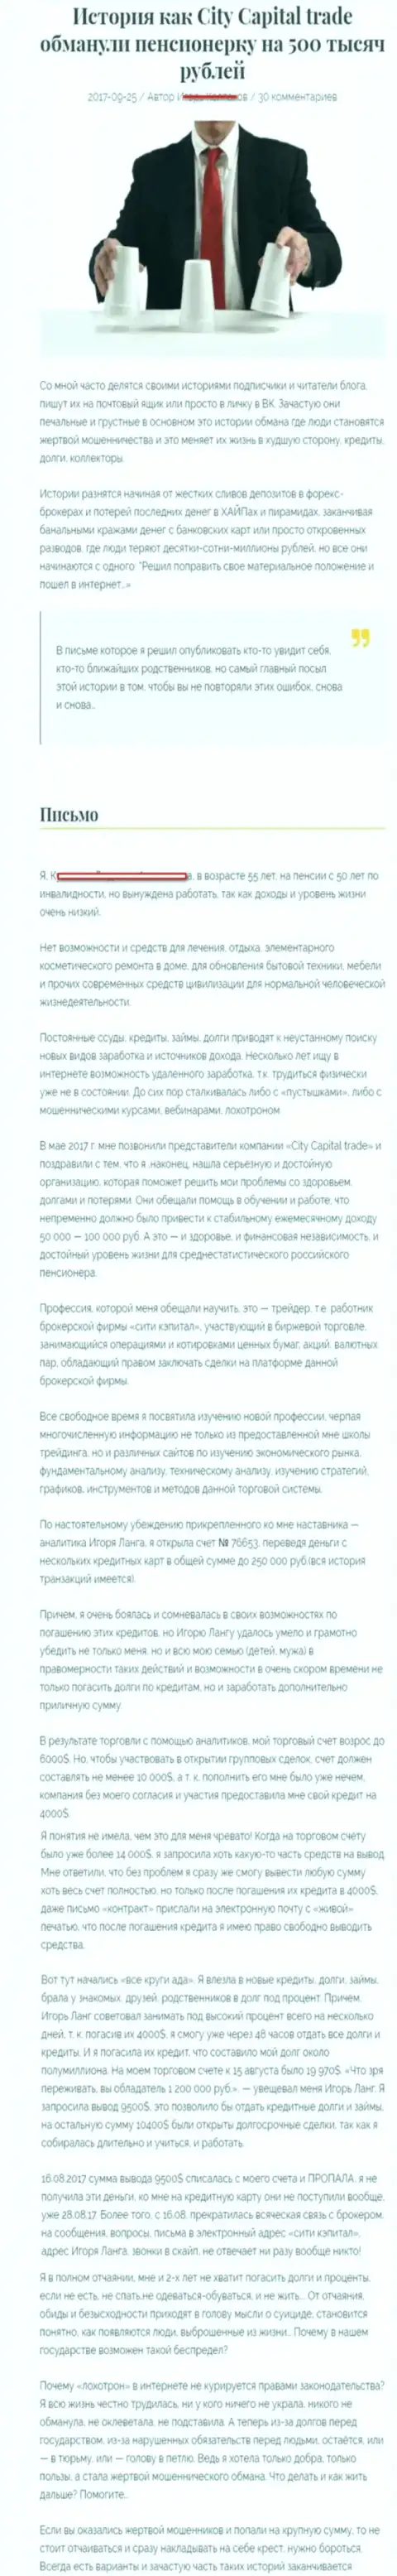 СитиКапитал Трейд обули клиентку на пенсии - инвалида на сумму 500 тыс. рублей - МОШЕННИКИ !!!